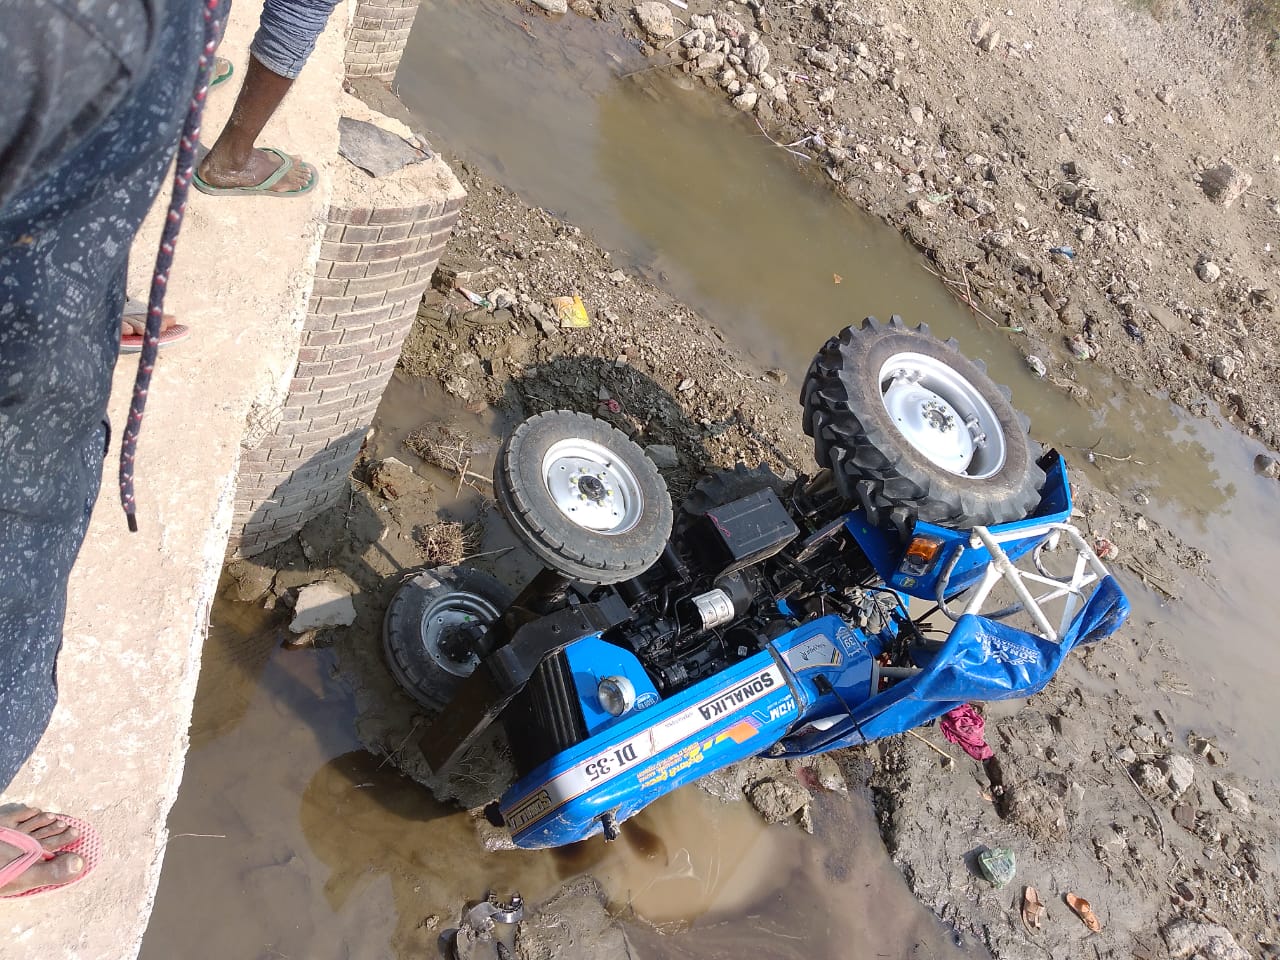 tractor accident fatehpur